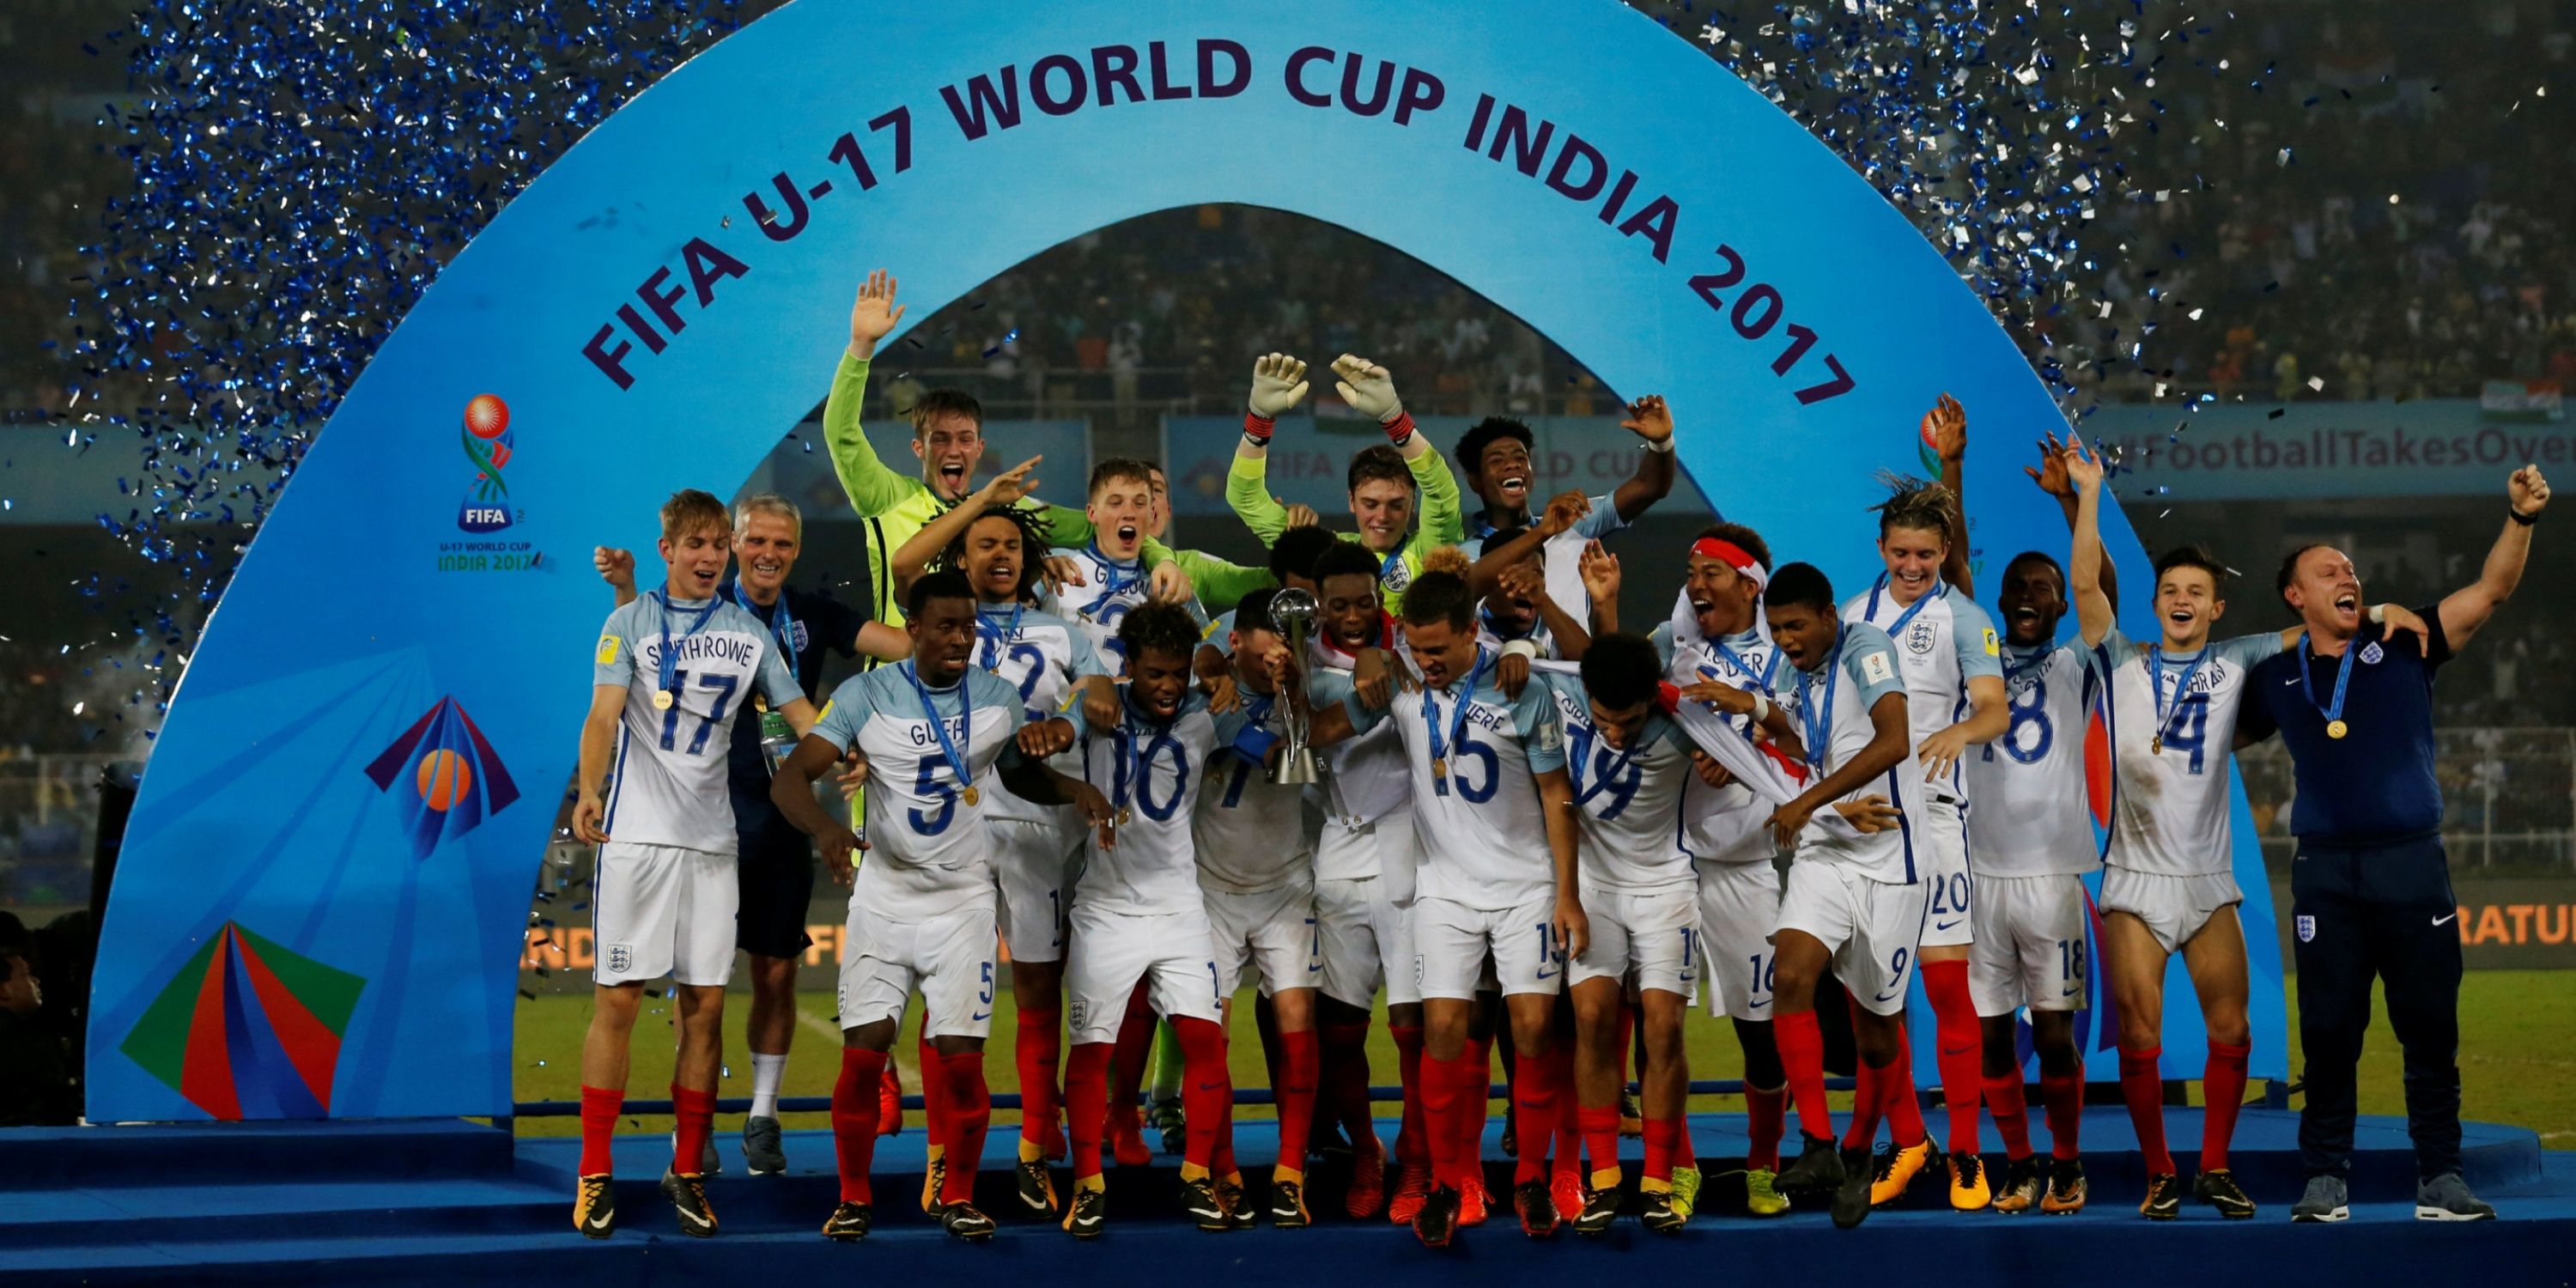 England's U17 World Cup winners in 2017